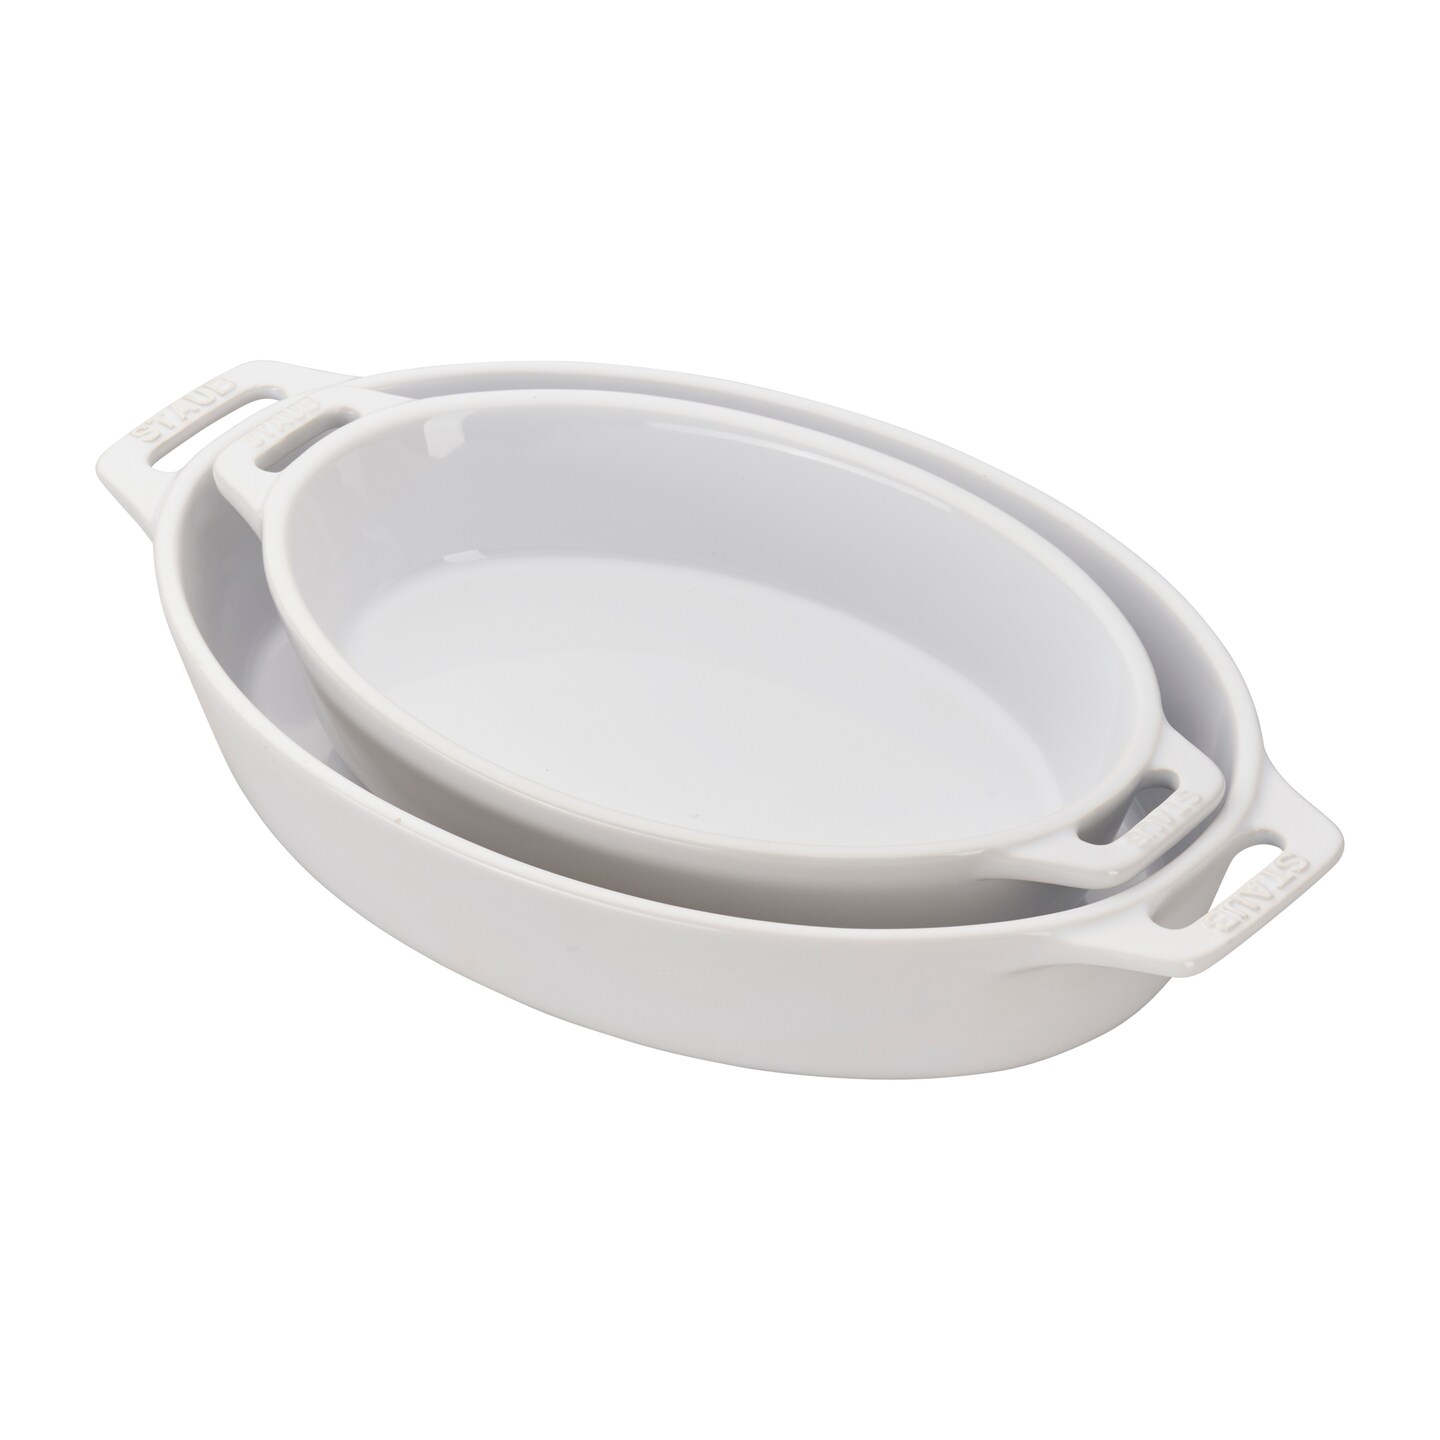 STAUB Ceramic 2-pc Oval Baking Dish Set